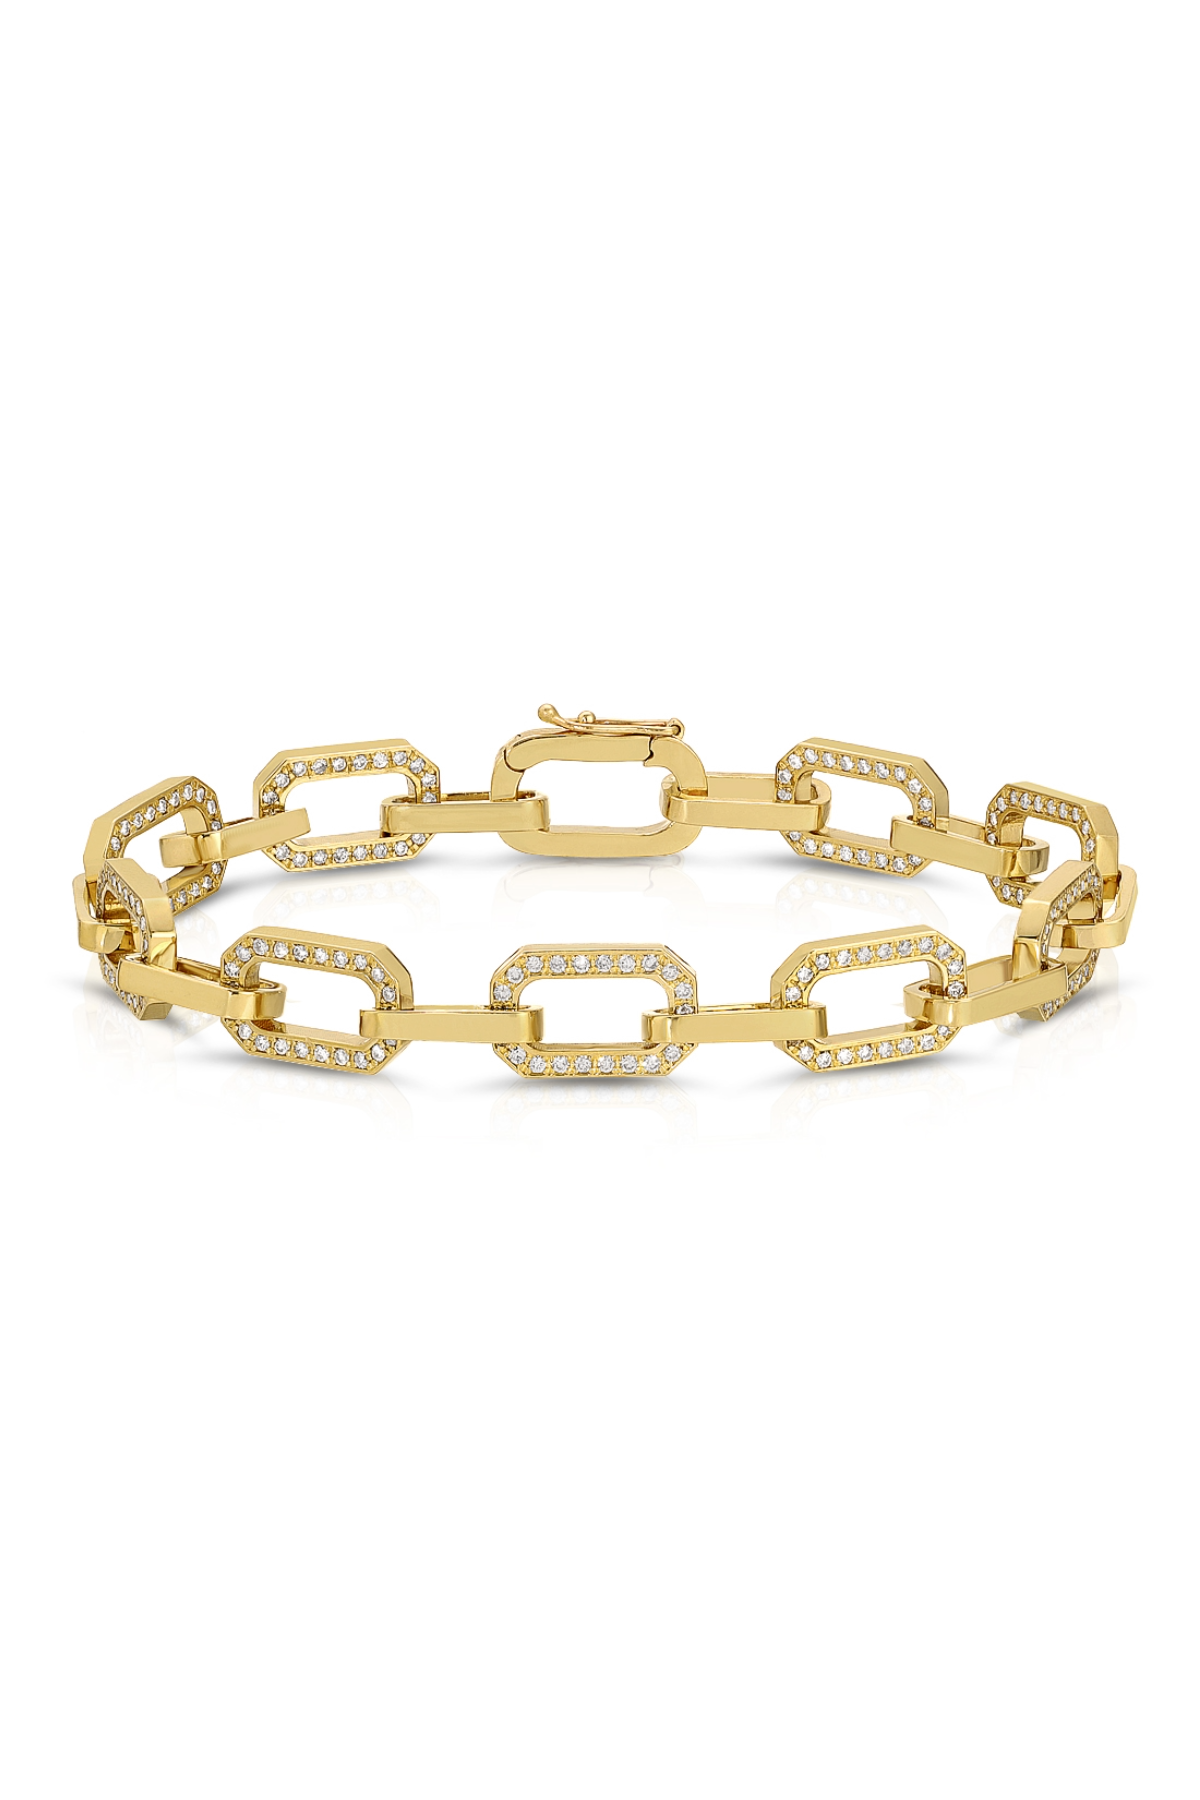 14K Yellow Gold Chain Bracelet with Diamond Links